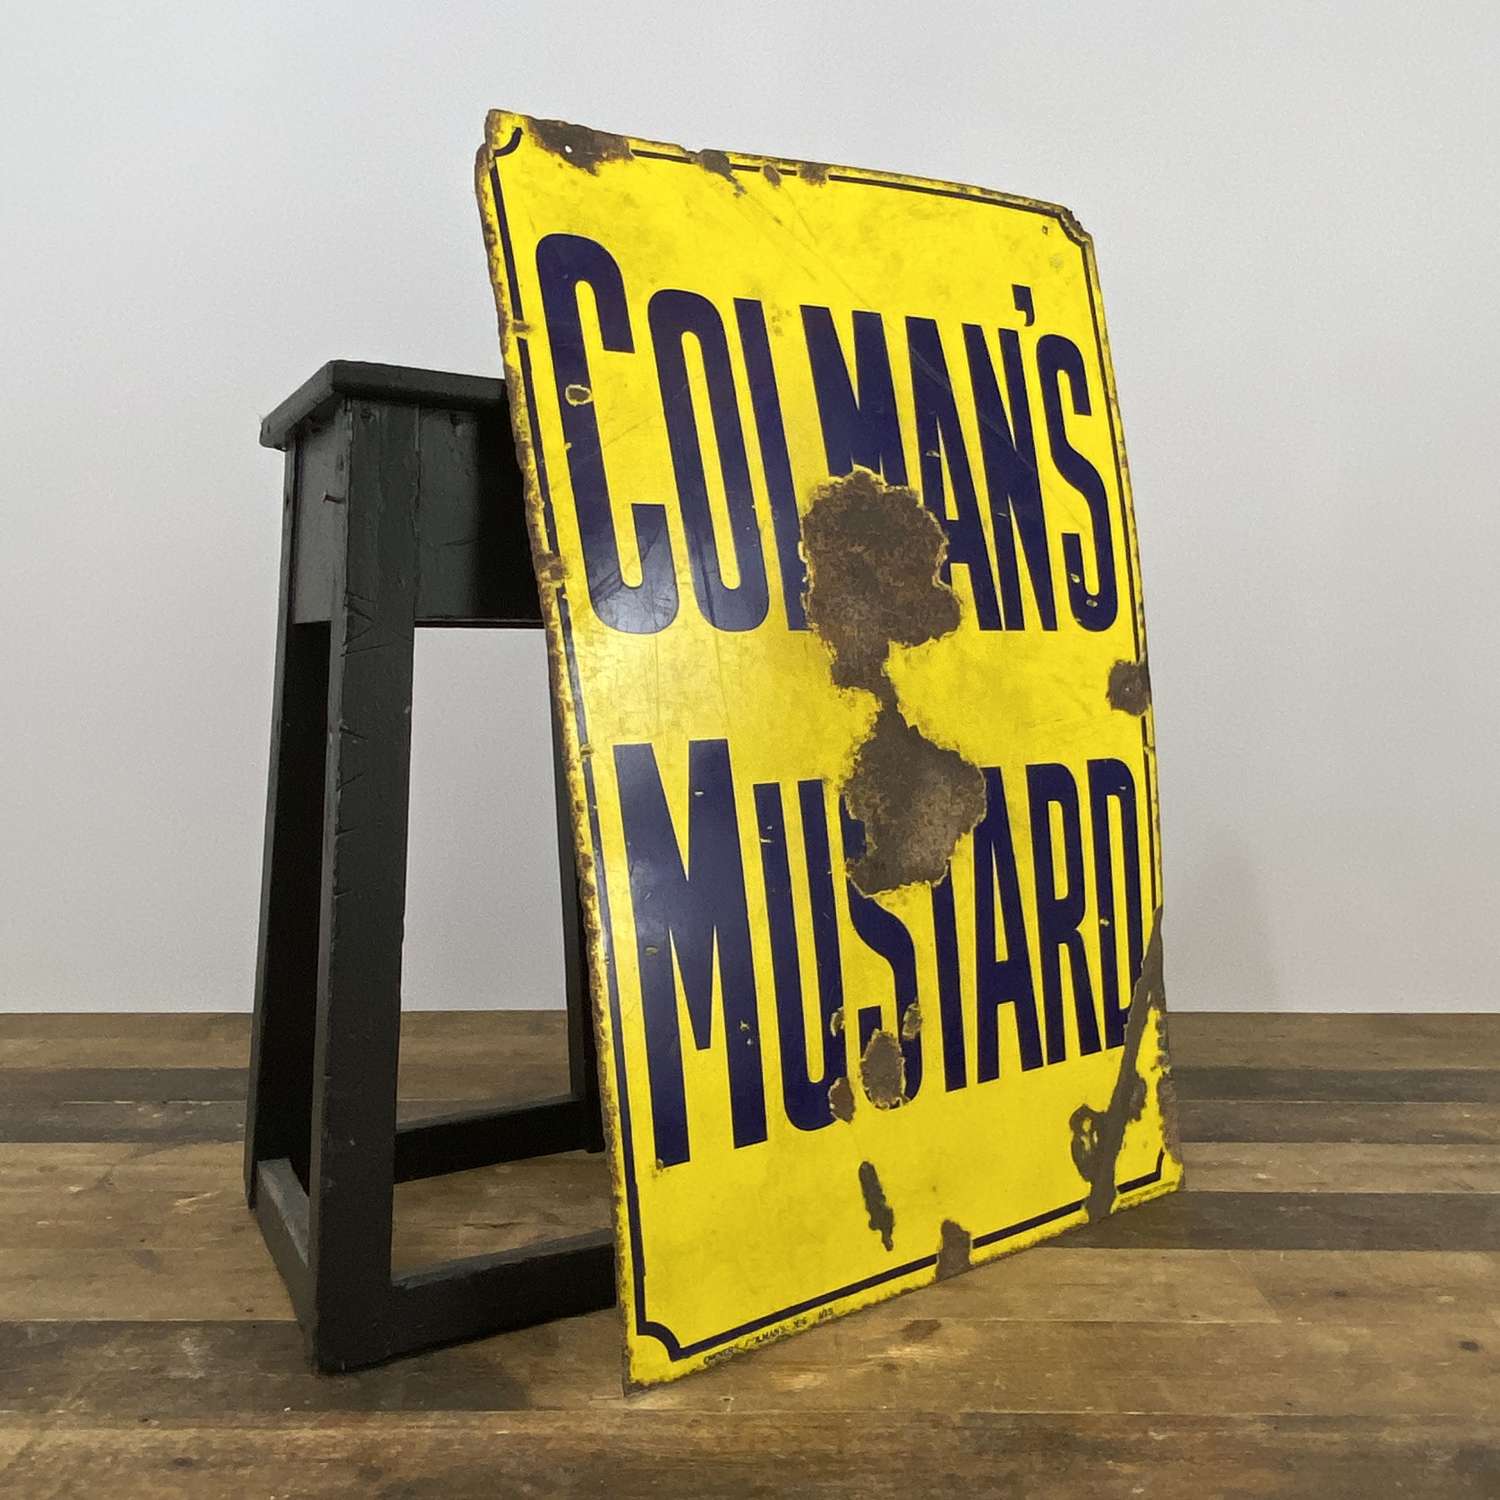 Colman’s mustard enamel sign